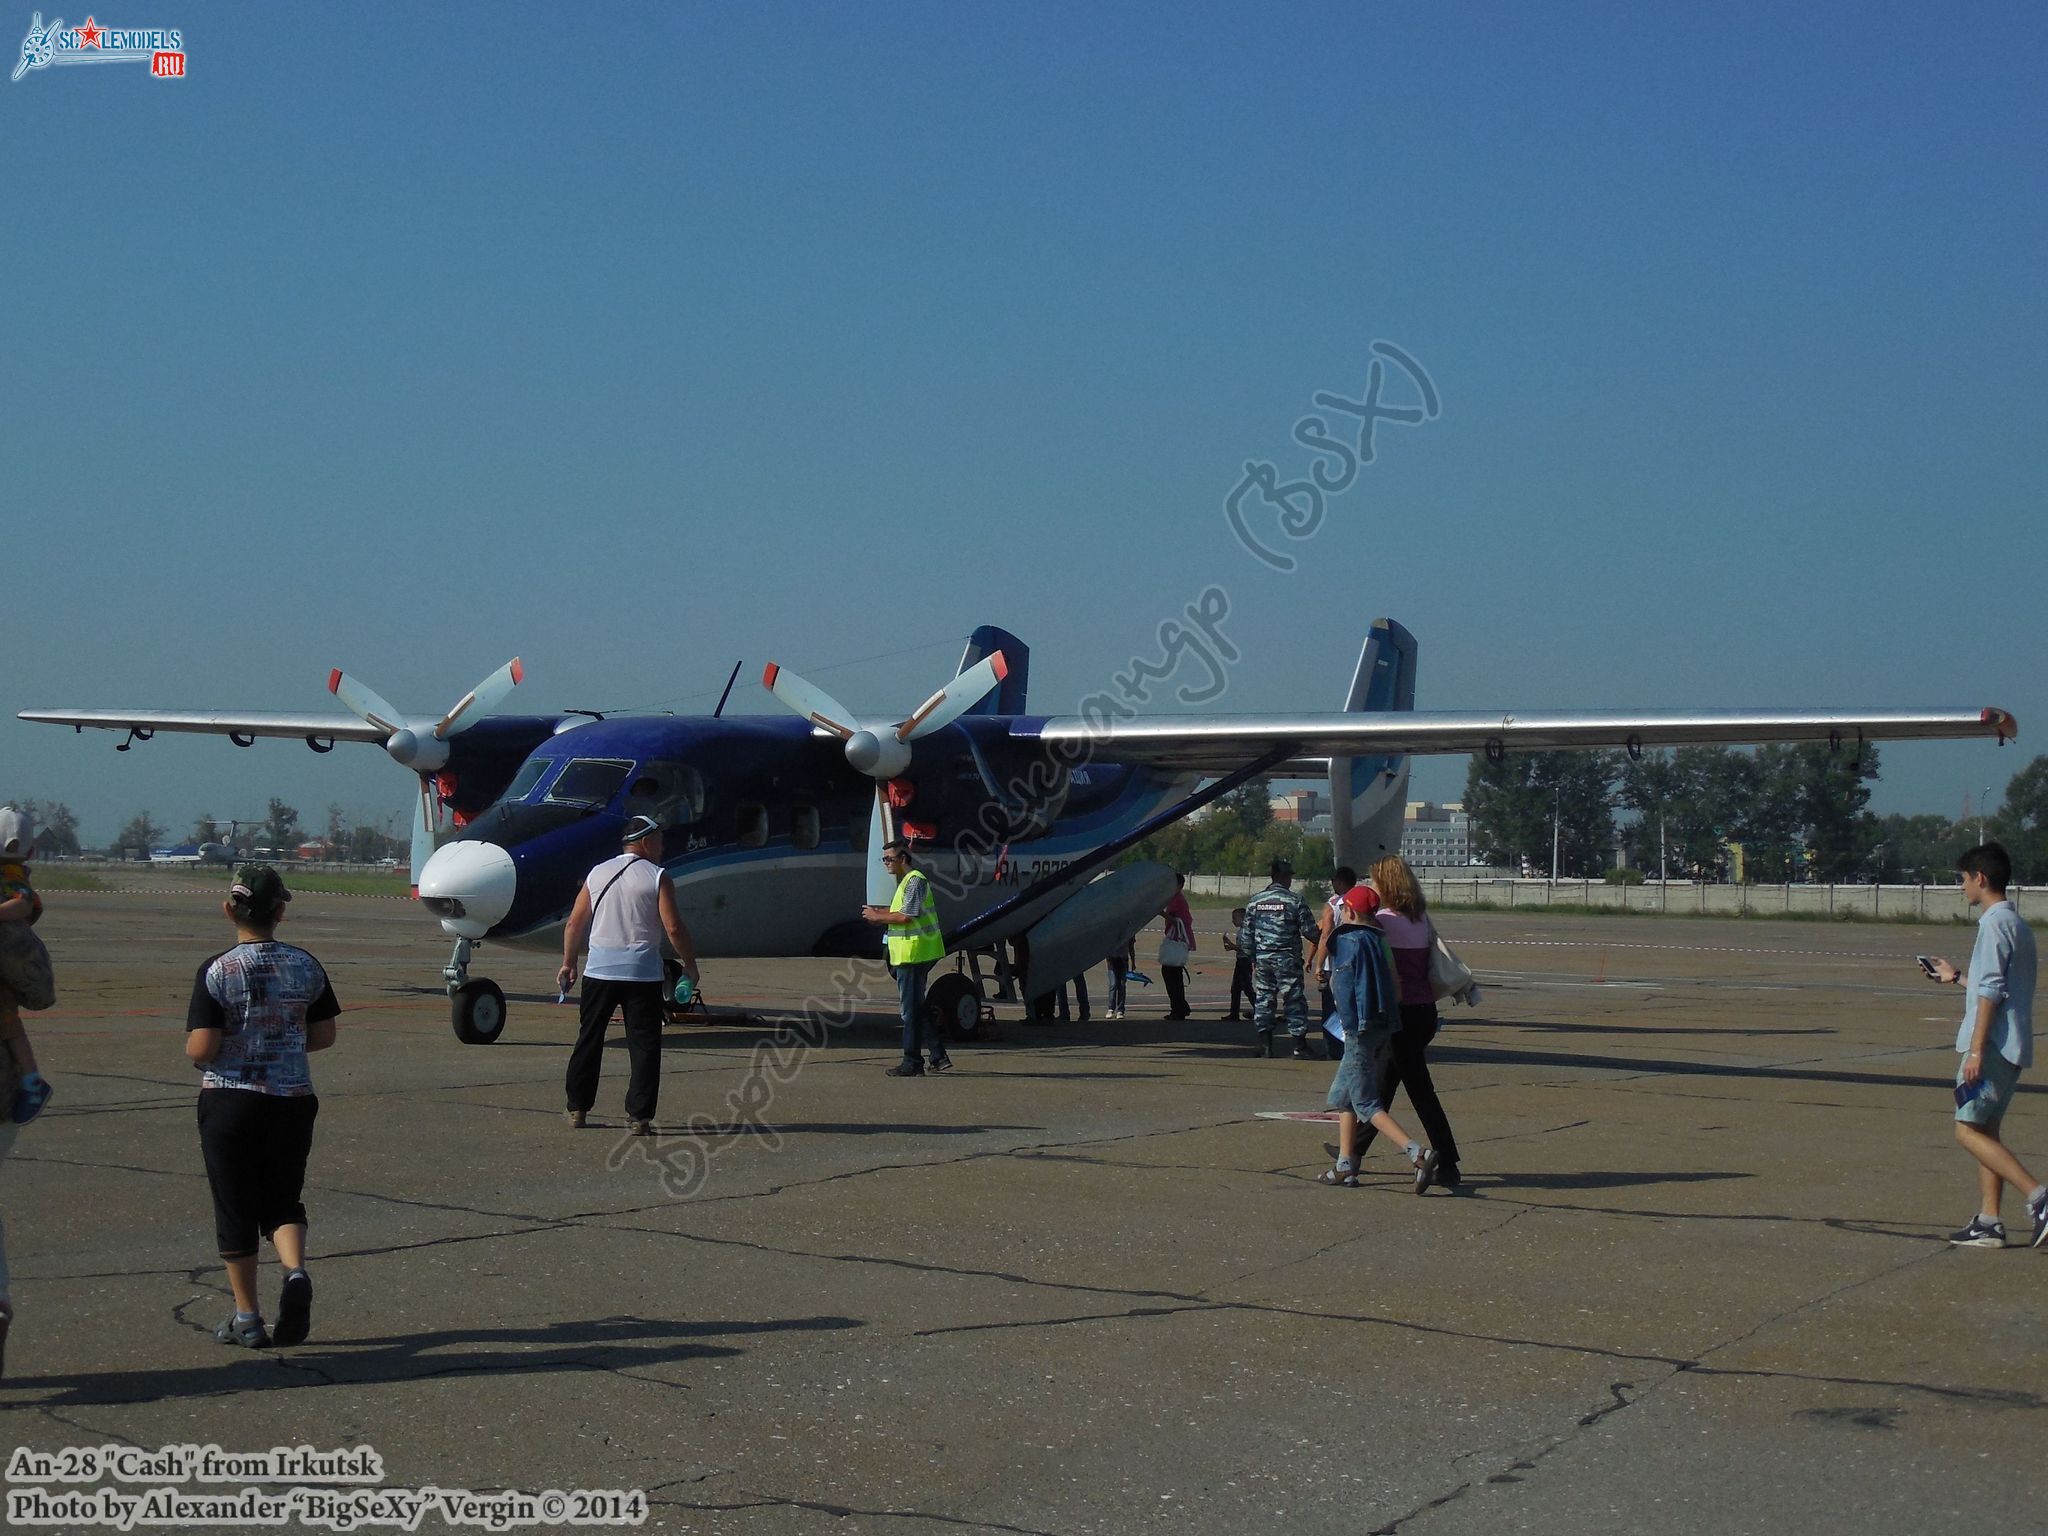 An-28 (RA-28728)_Irkutsk_002